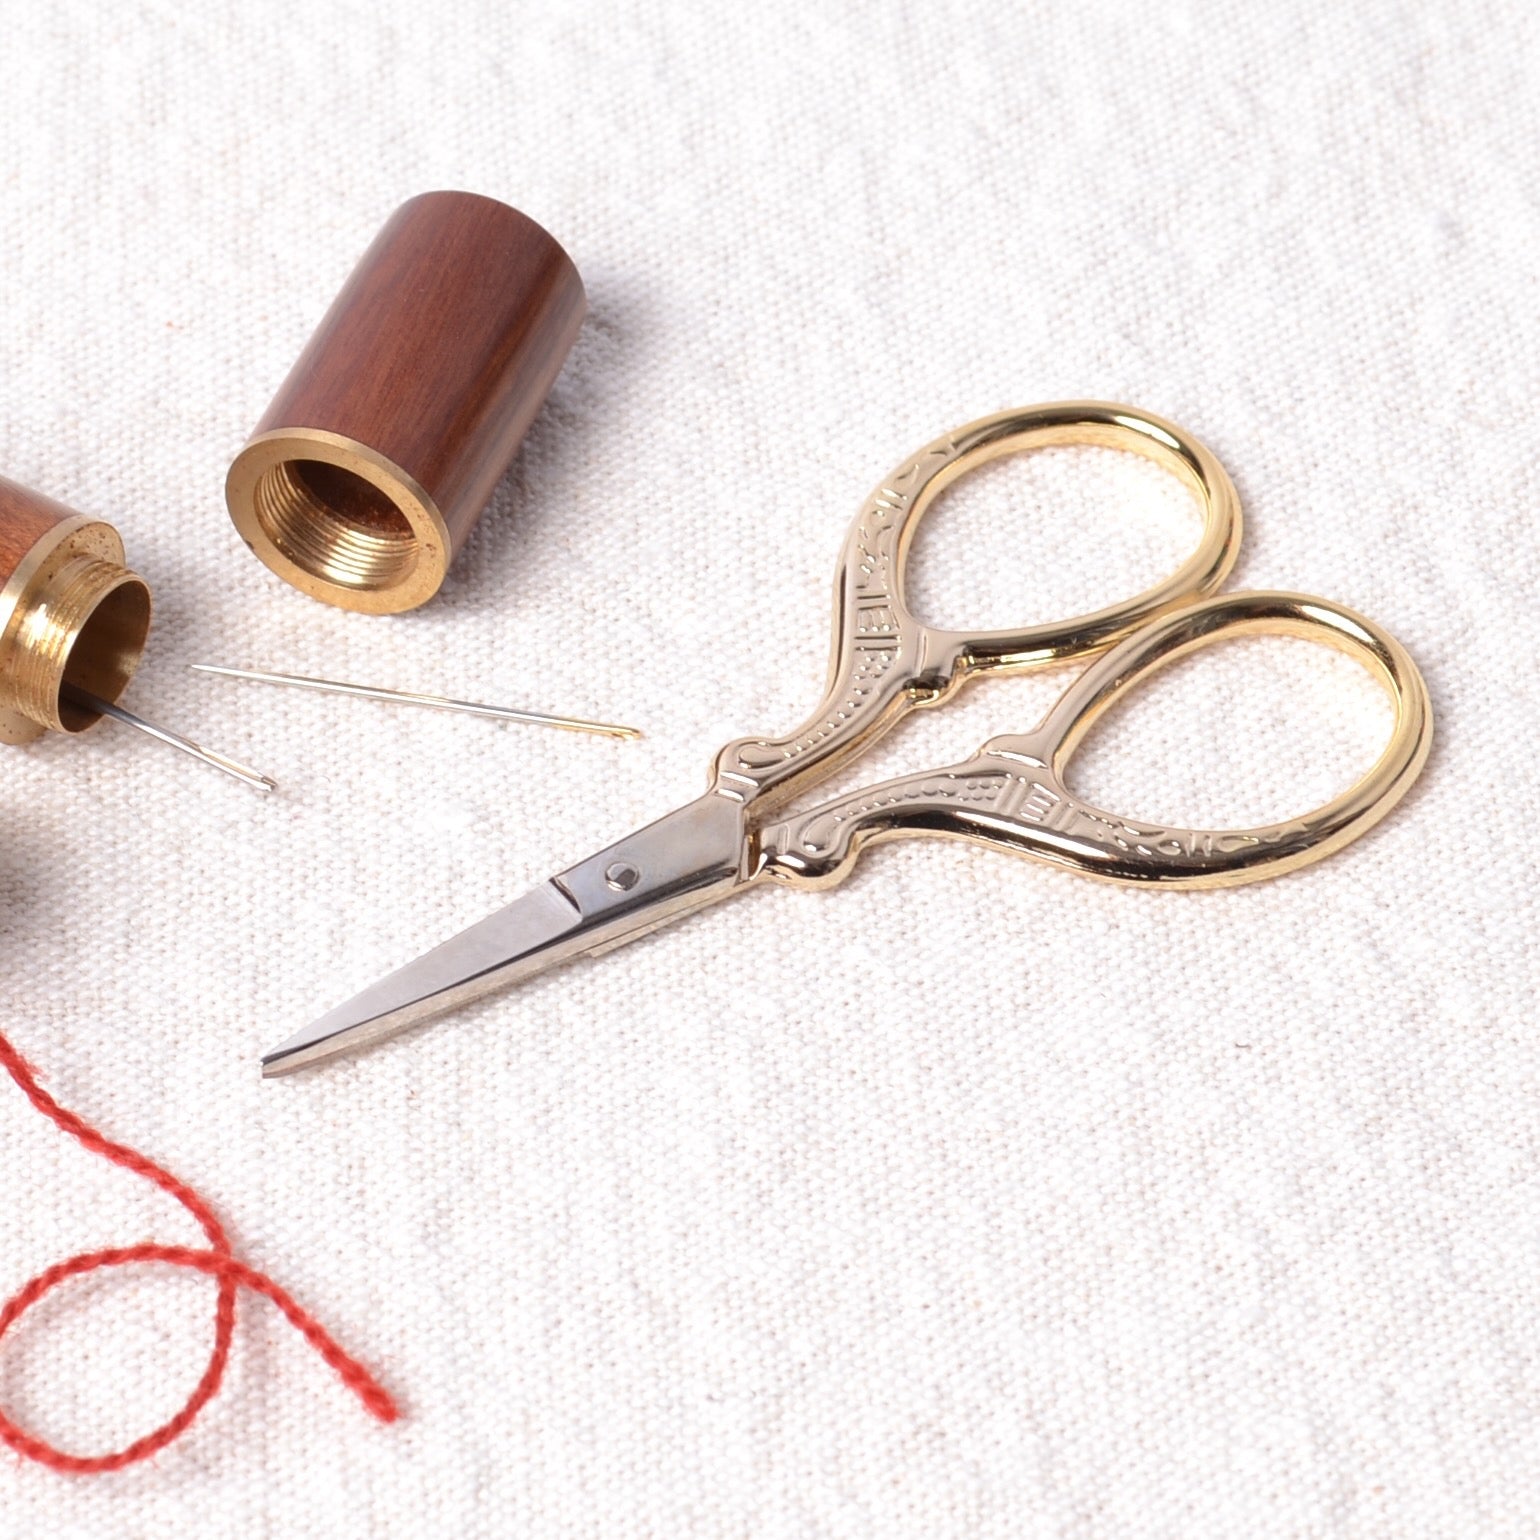 needle craft scissors